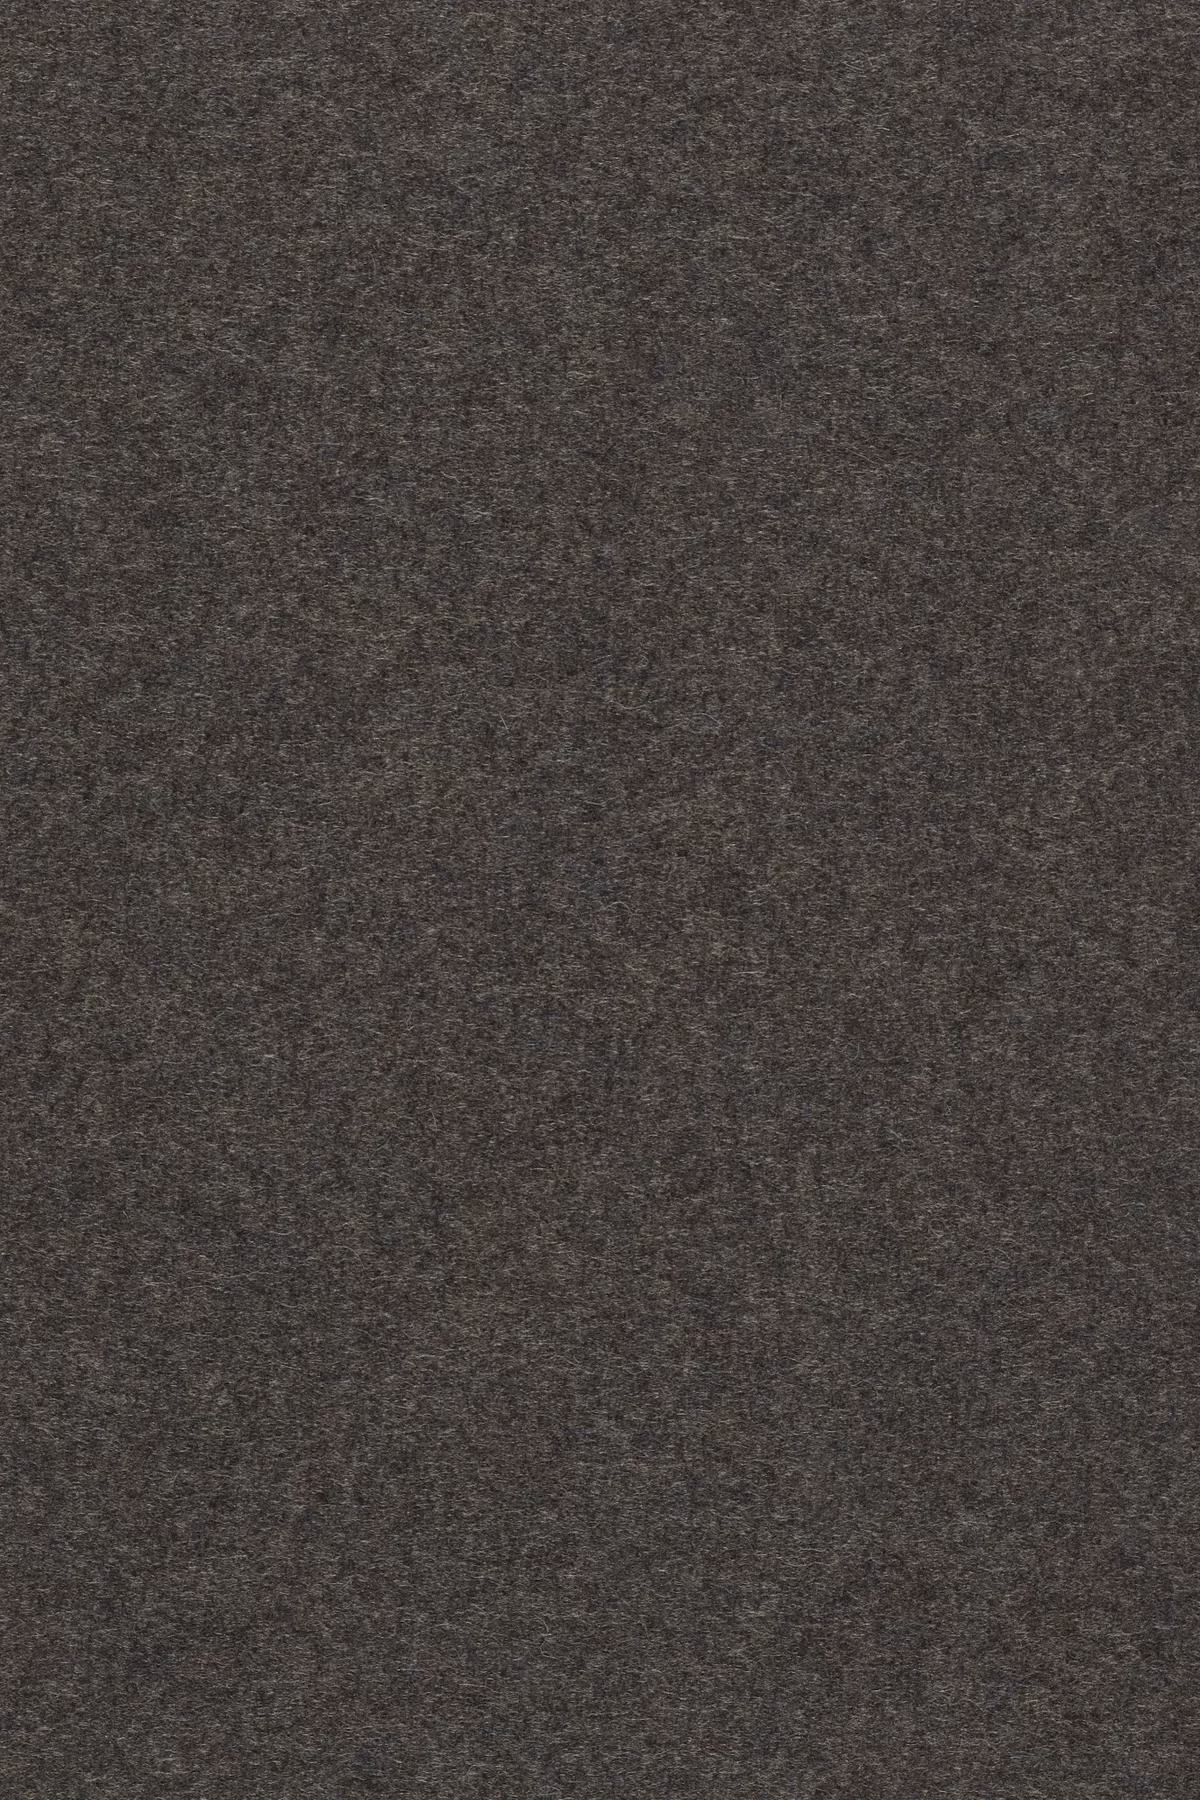 Fabric sample Divina MD 353 brown